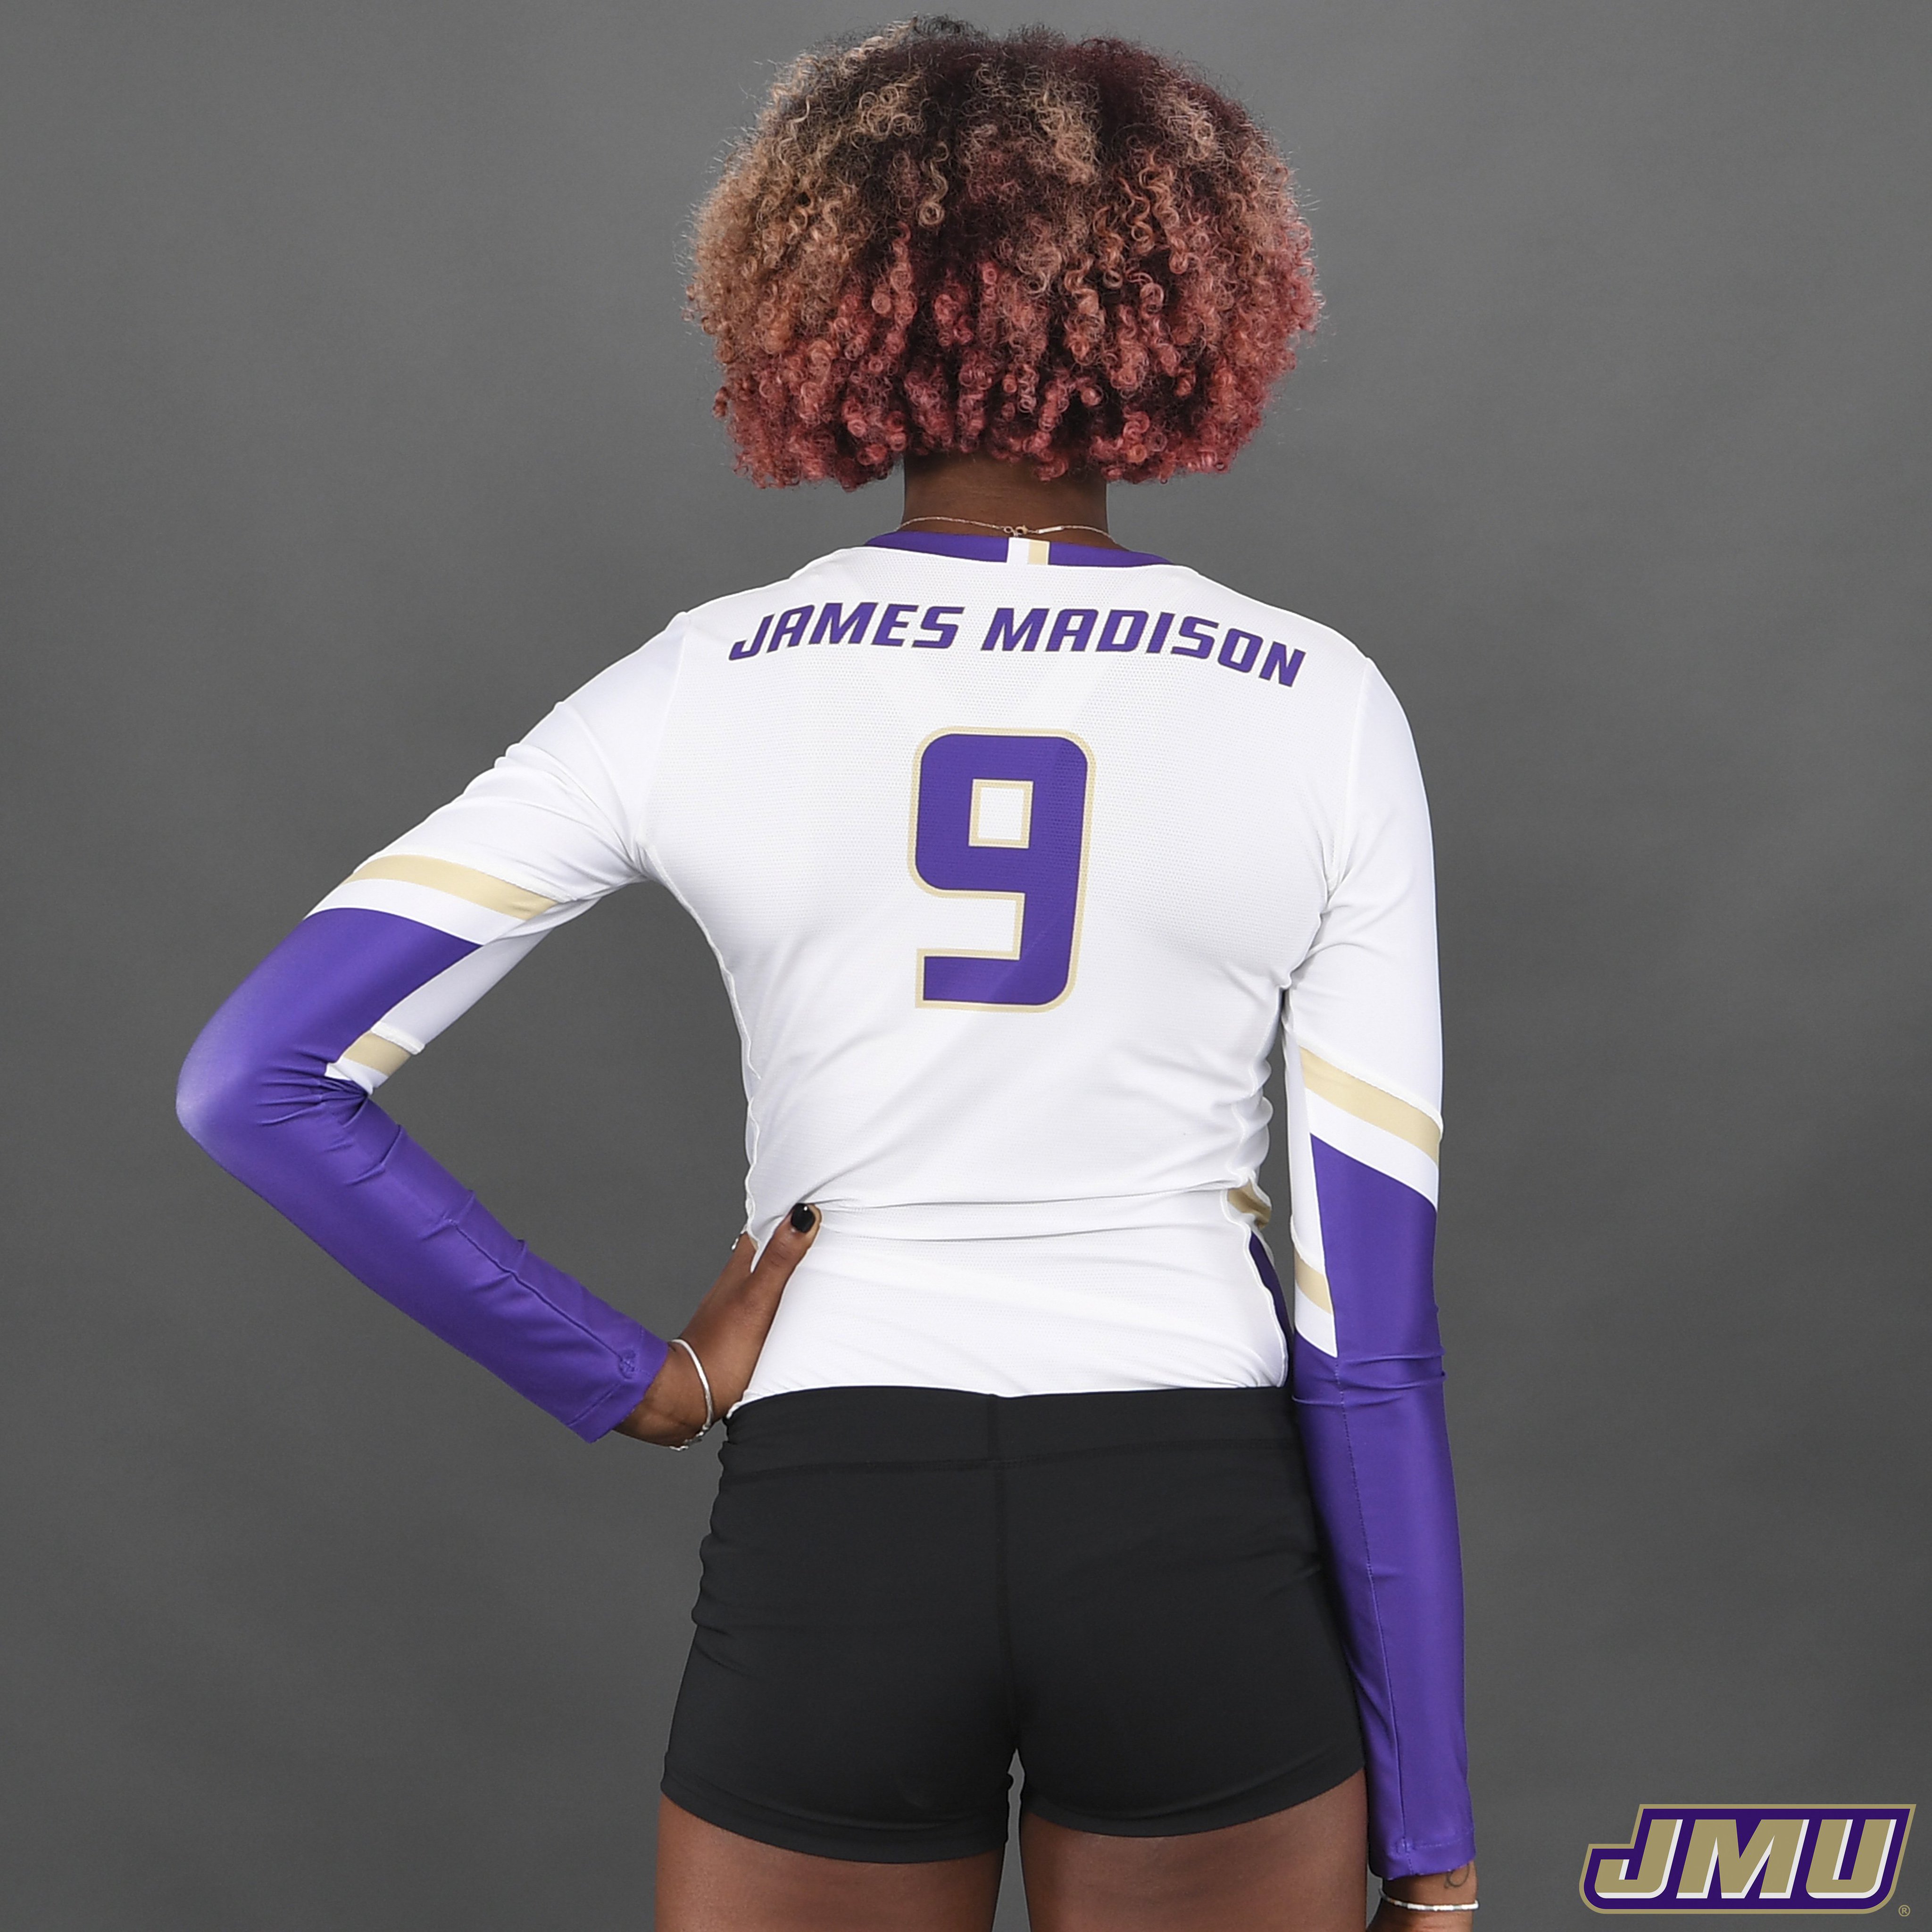 Briley Brind'Amour - Volleyball - James Madison University Athletics